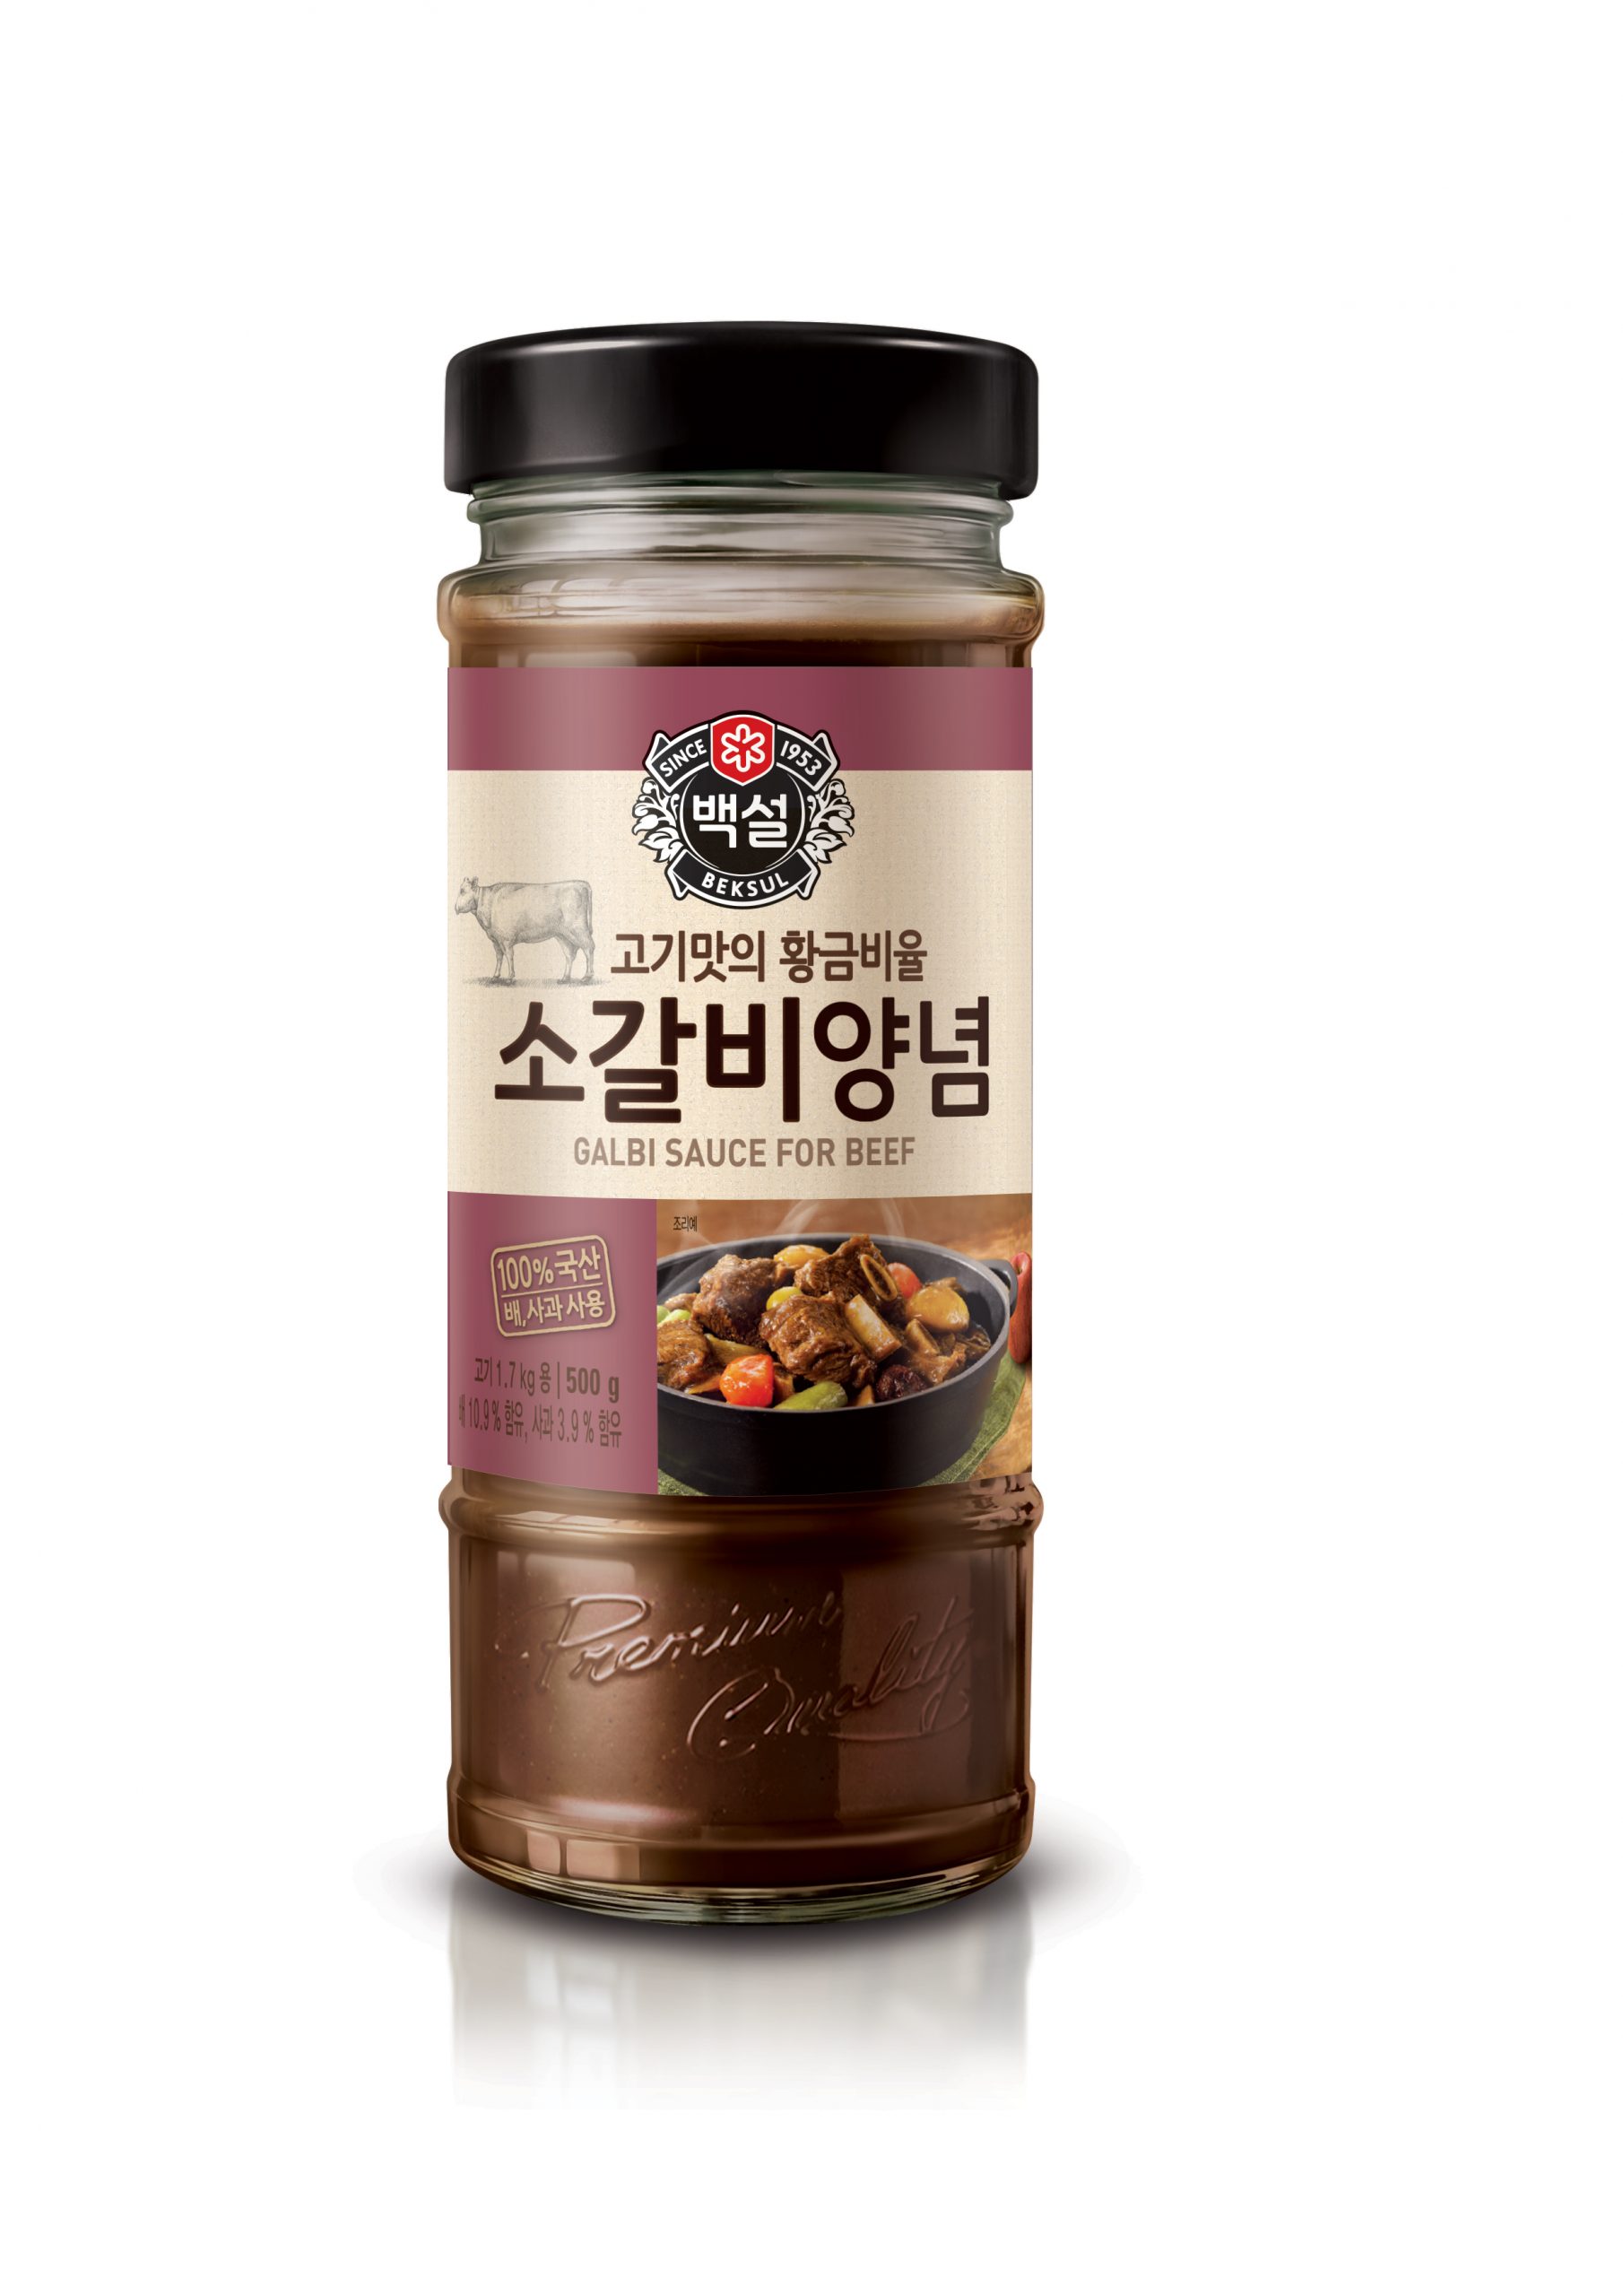 Korean BBQ Sauce Galbi Sauce for Beef G